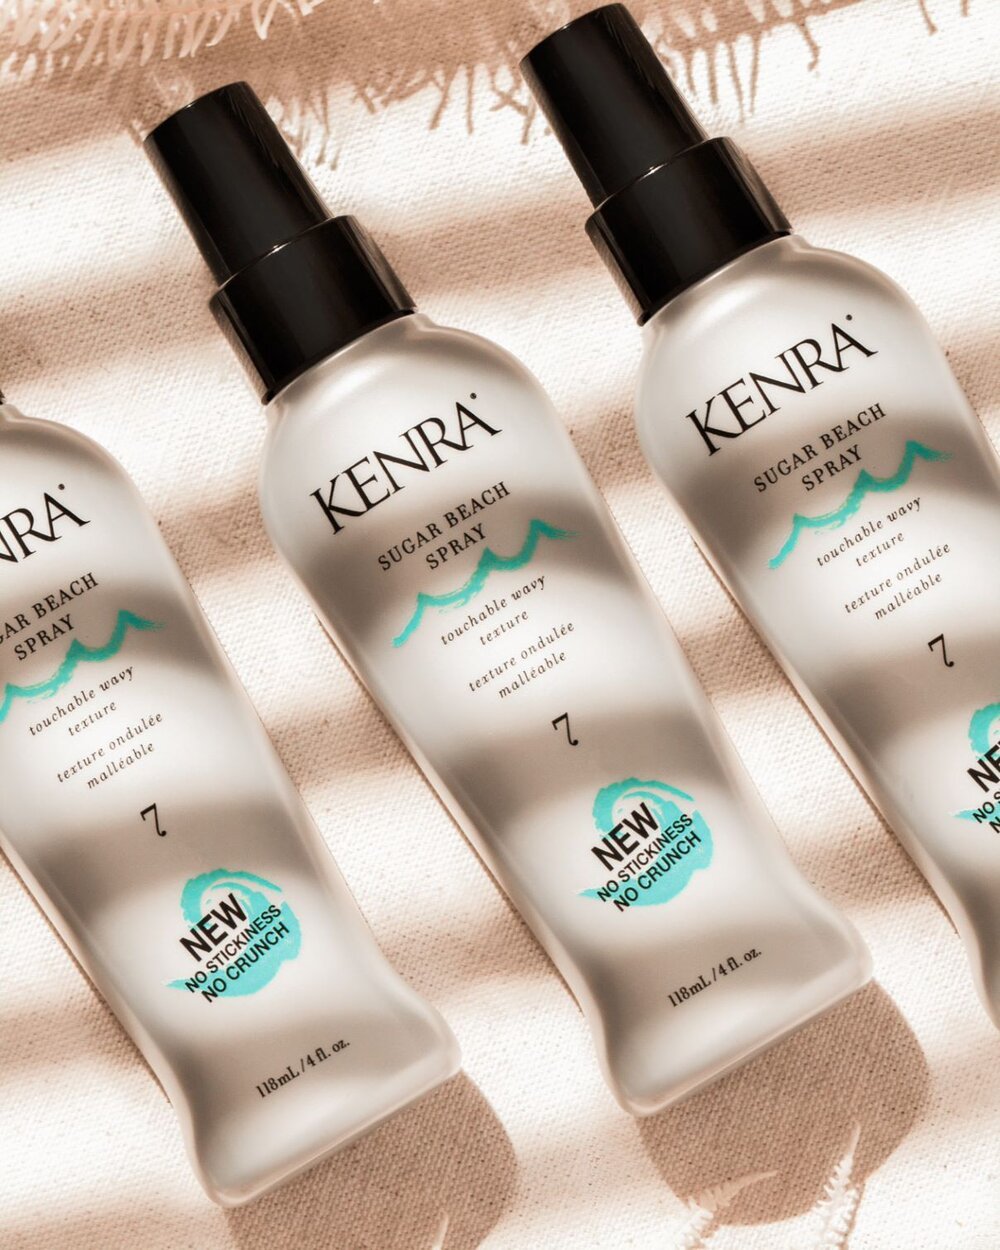 Kenra Sugar Beach Spray 7 - Totality Skincare